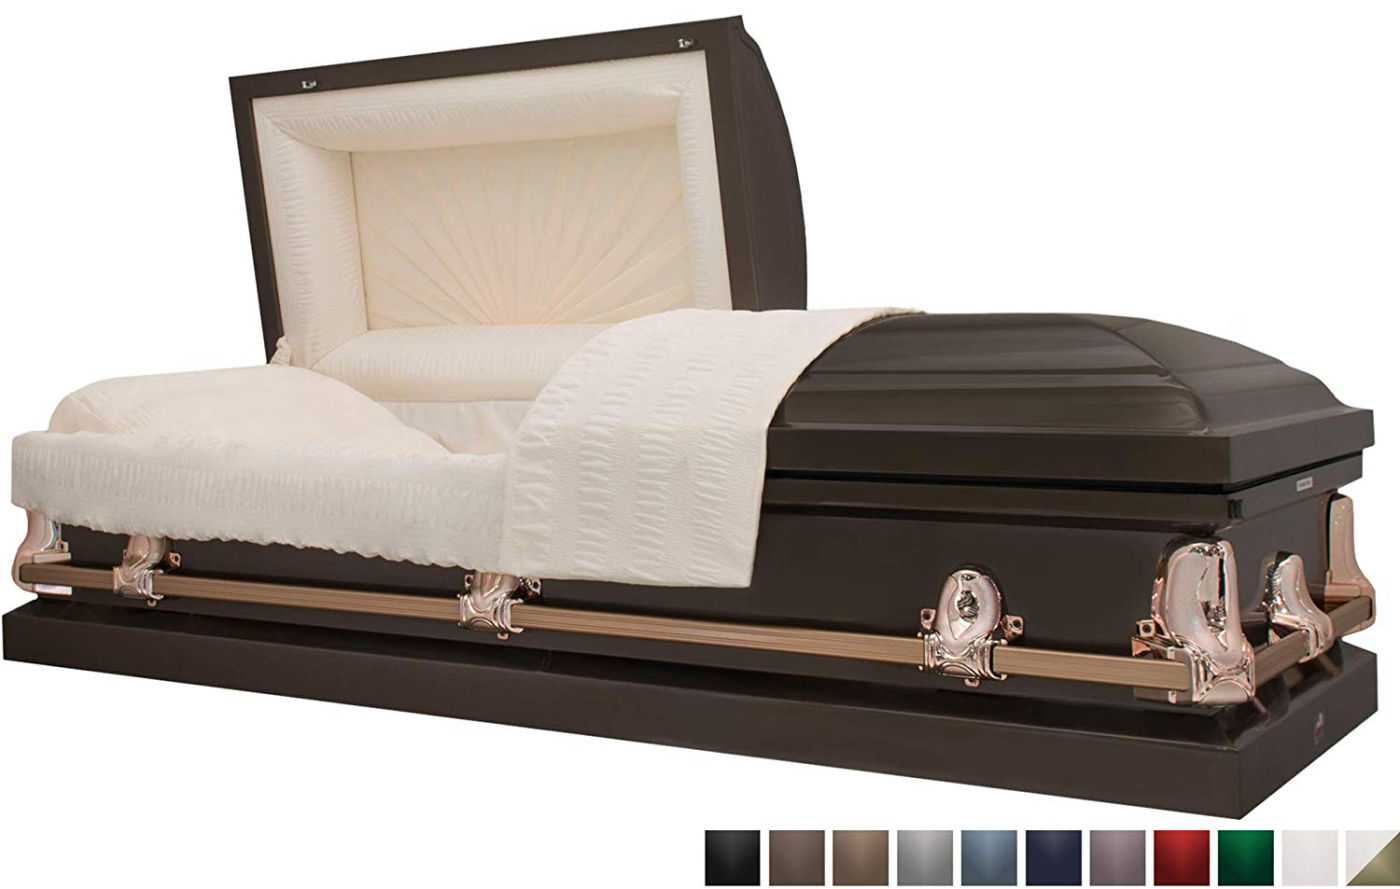 Amazon titaln casket image